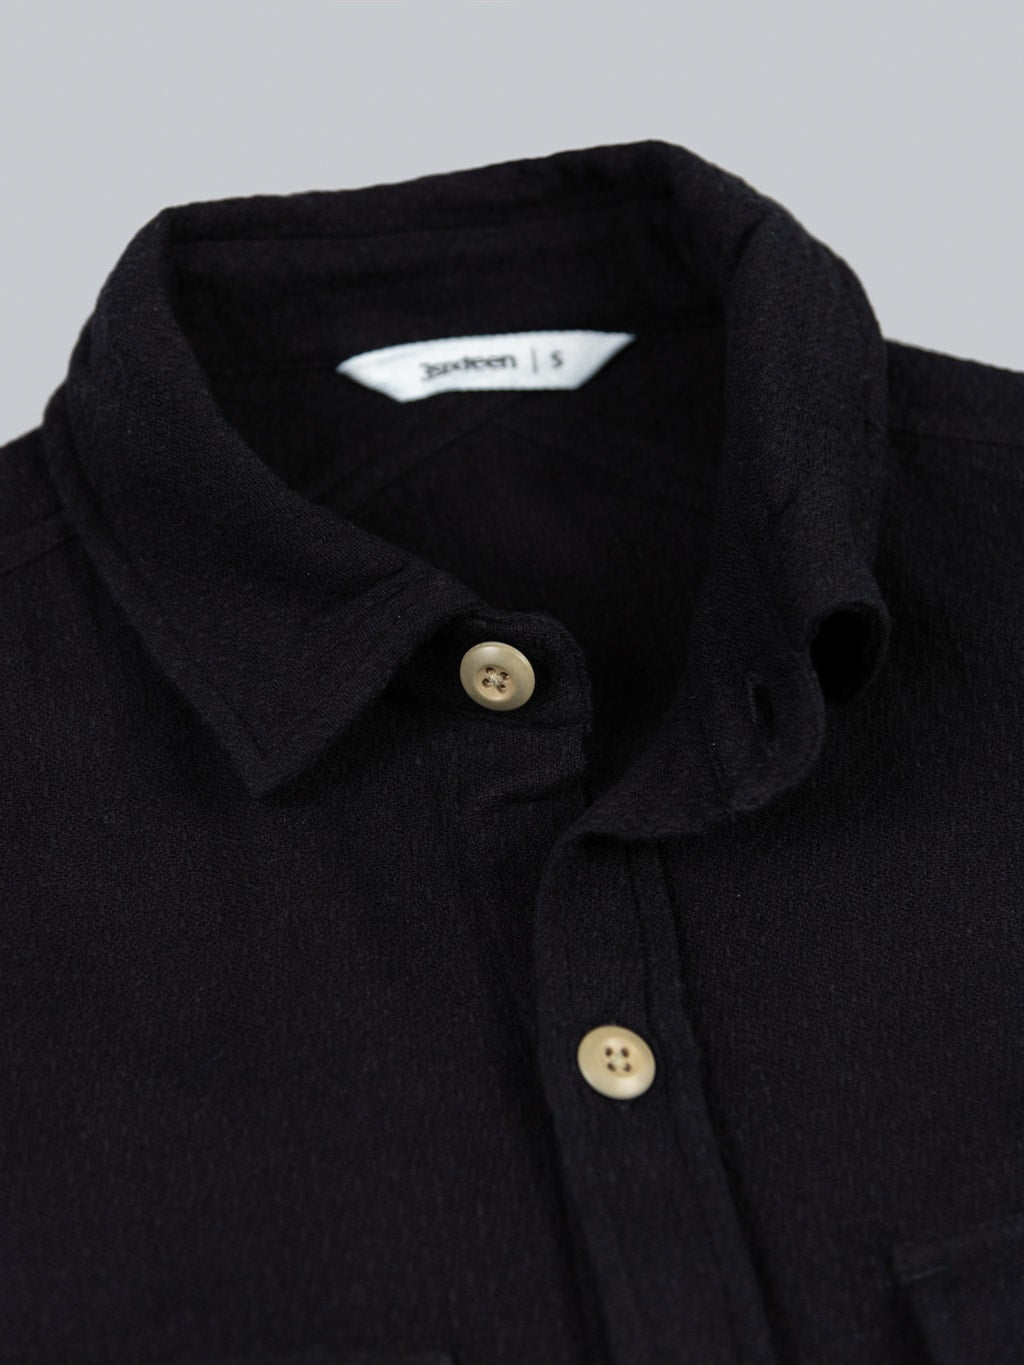 3sixteen CPO Shirt black Sashiko collar detail